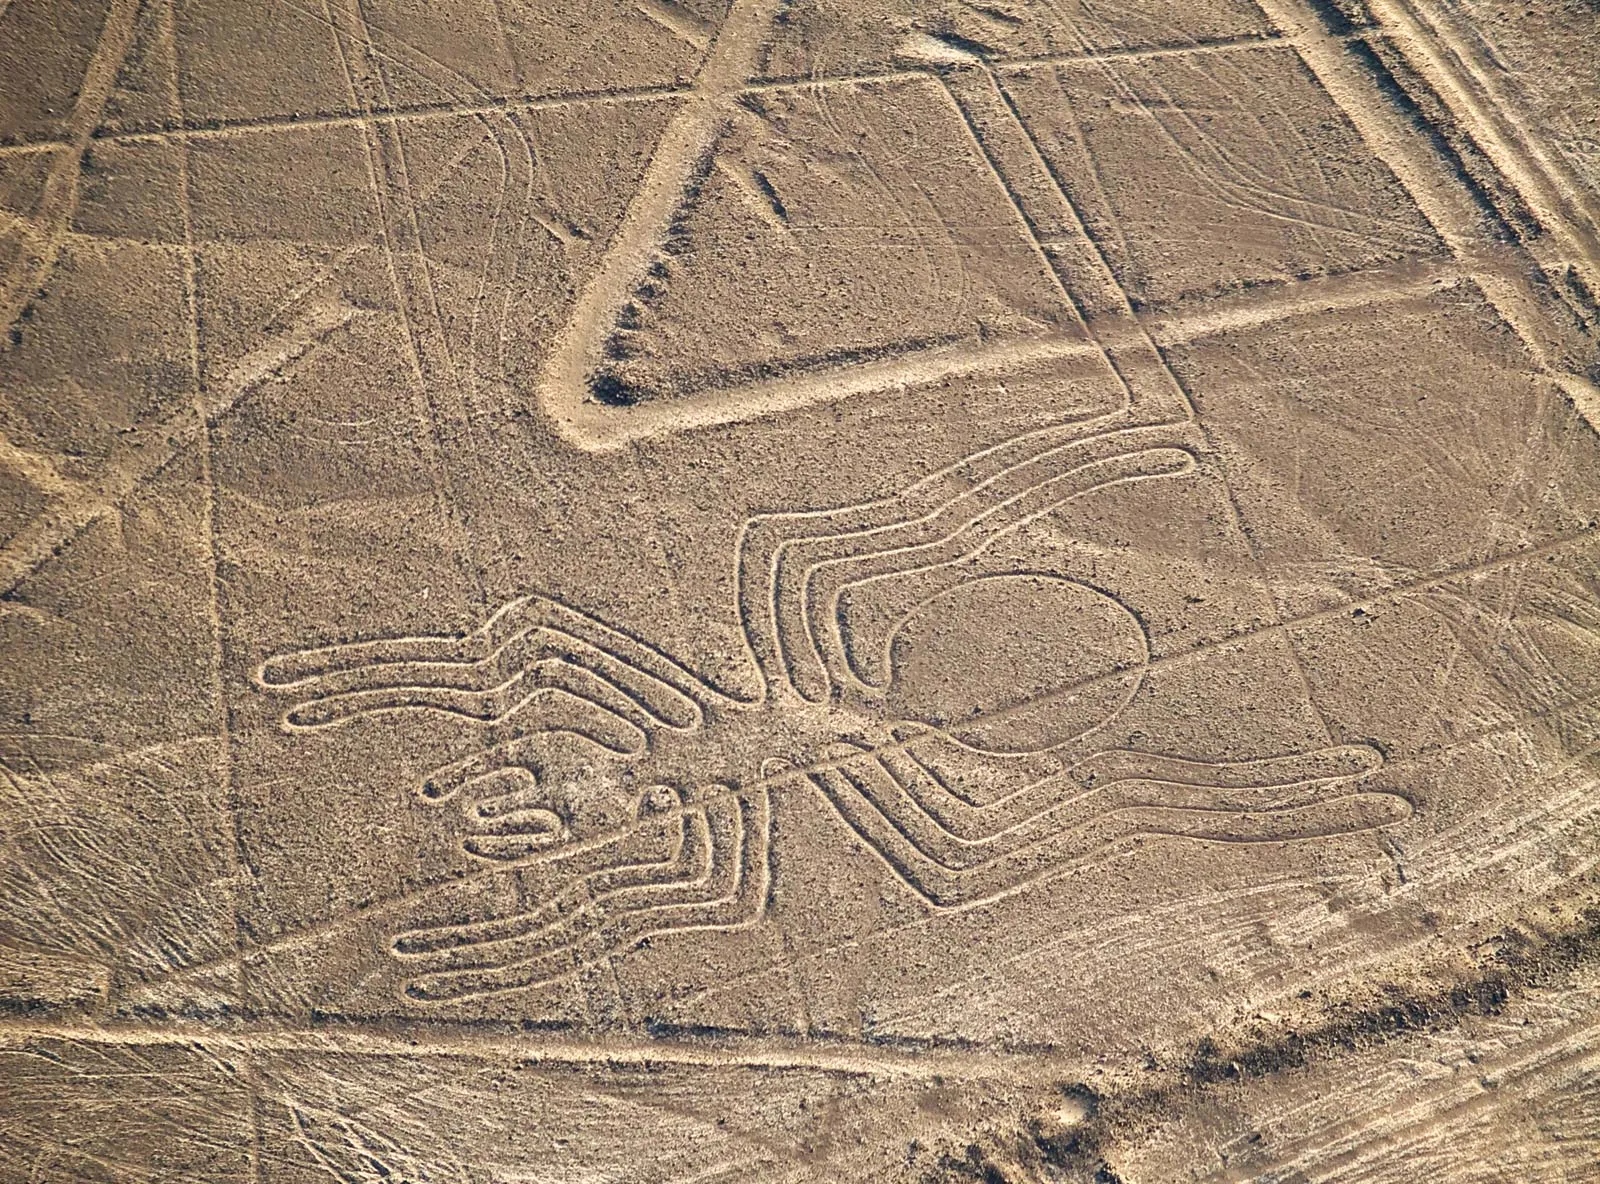 Spider shaped Nazca lines in Peru